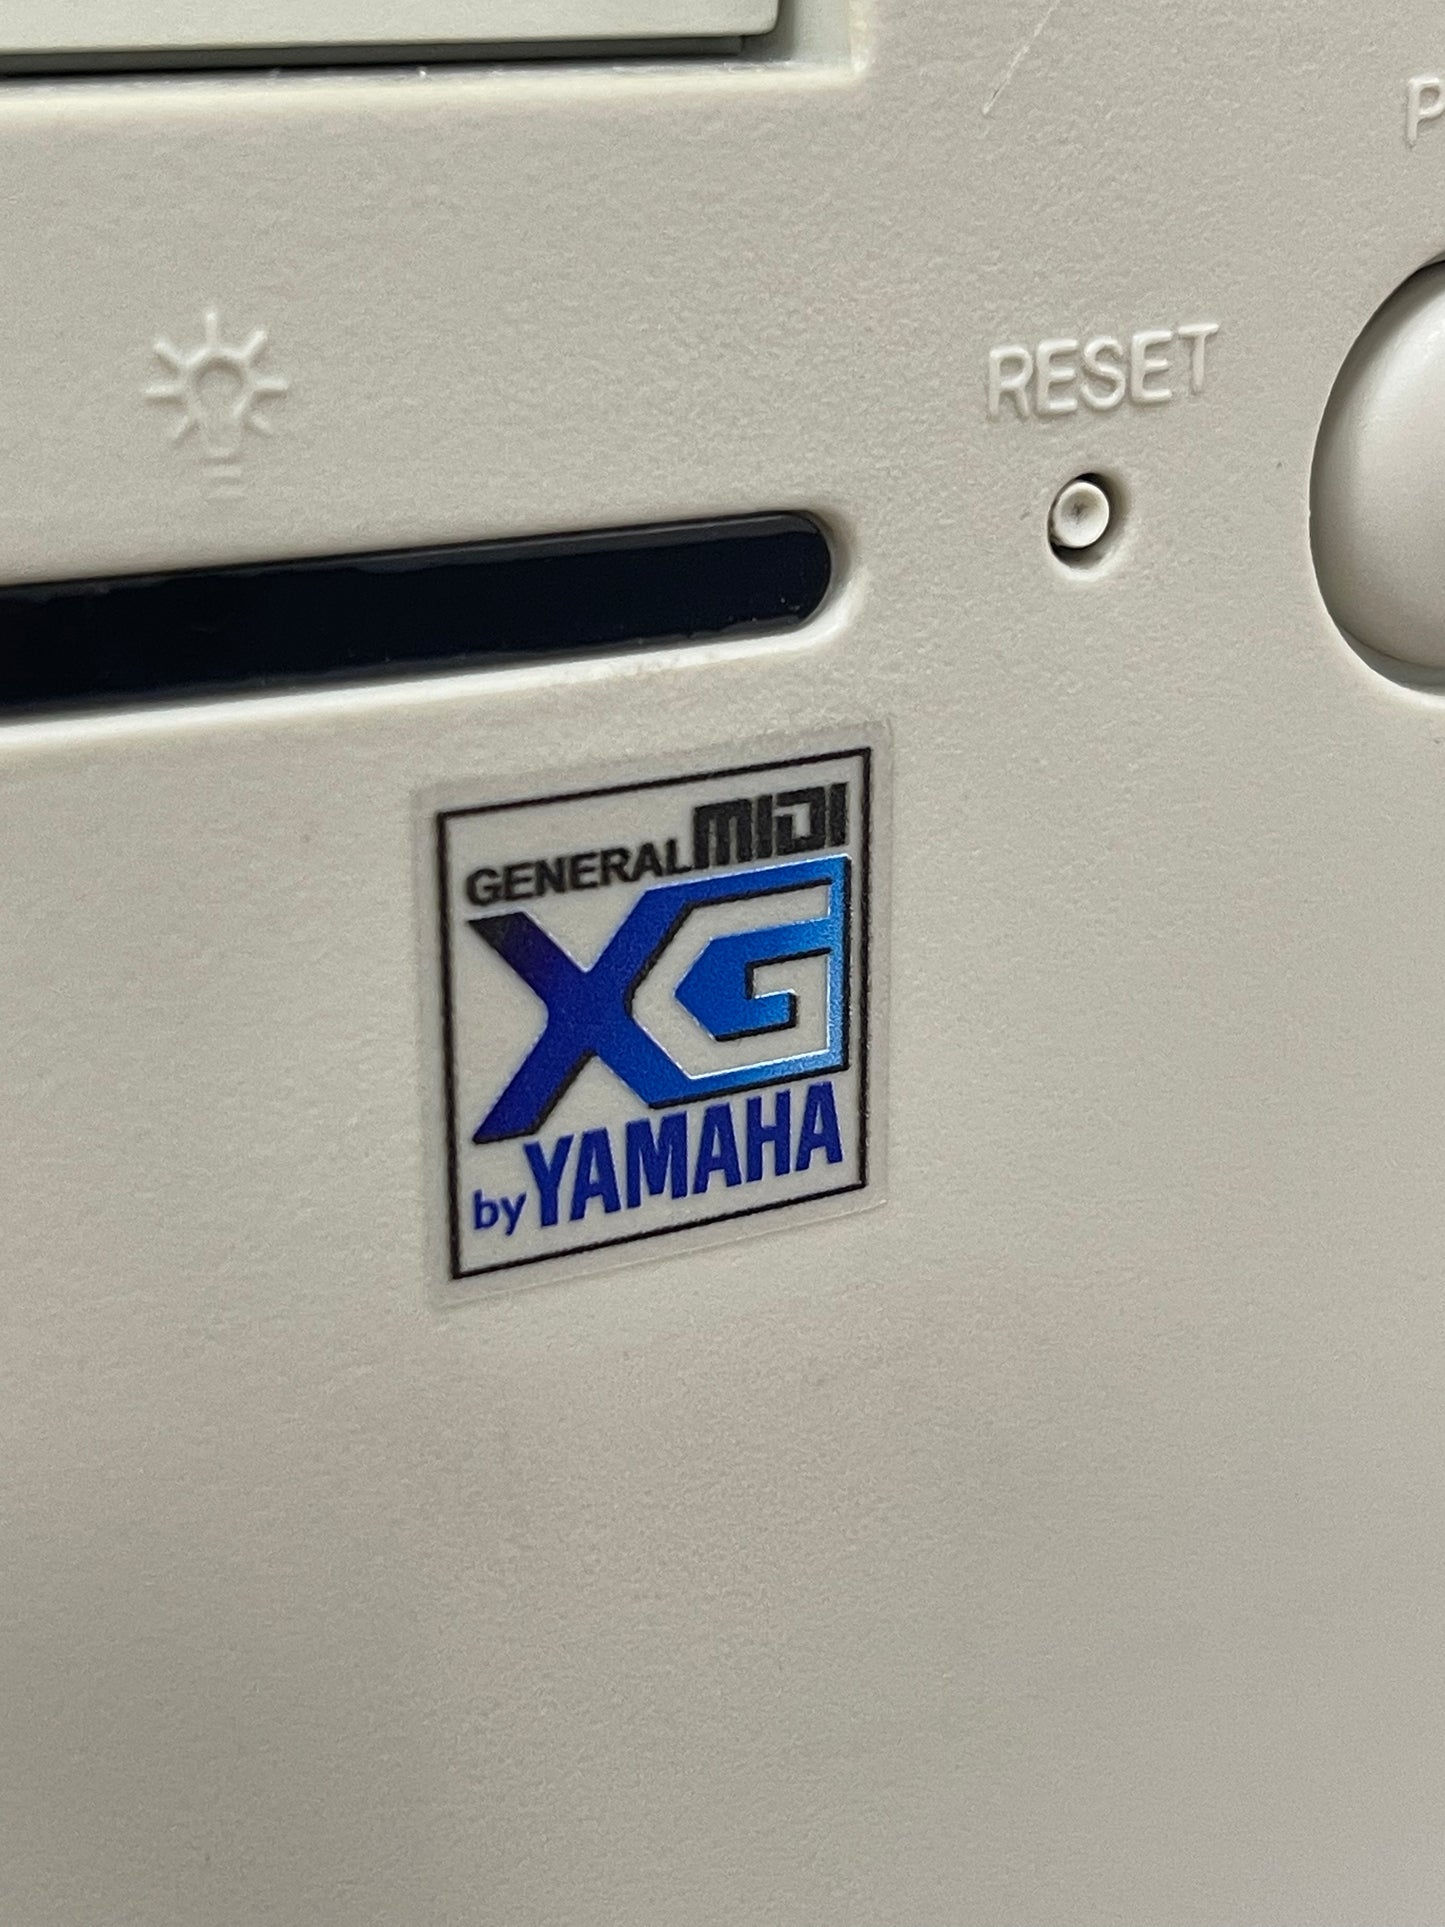 Yamaha XG General MIDI Audio Case Badge Sticker - Clear